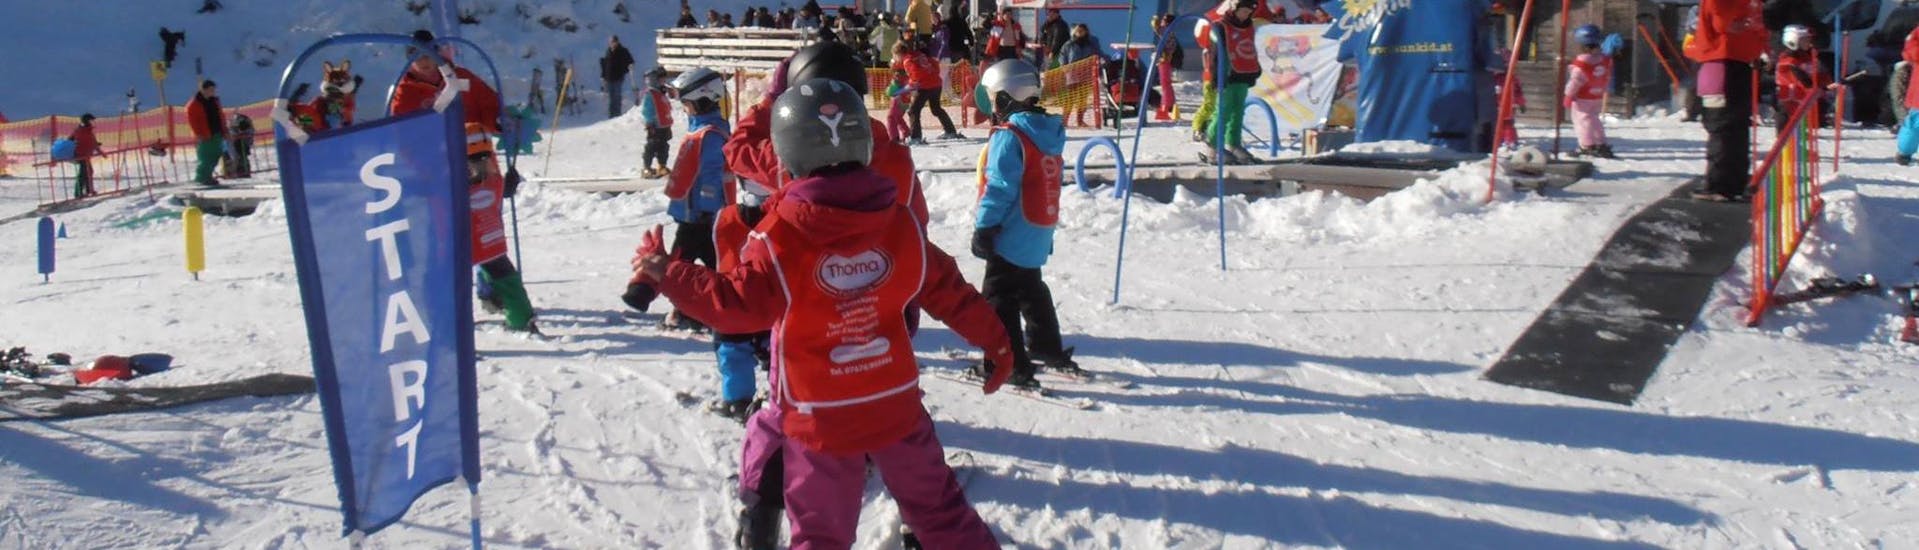 A kids ski lessons for all levels with ski school Thoma Feldberg take place.